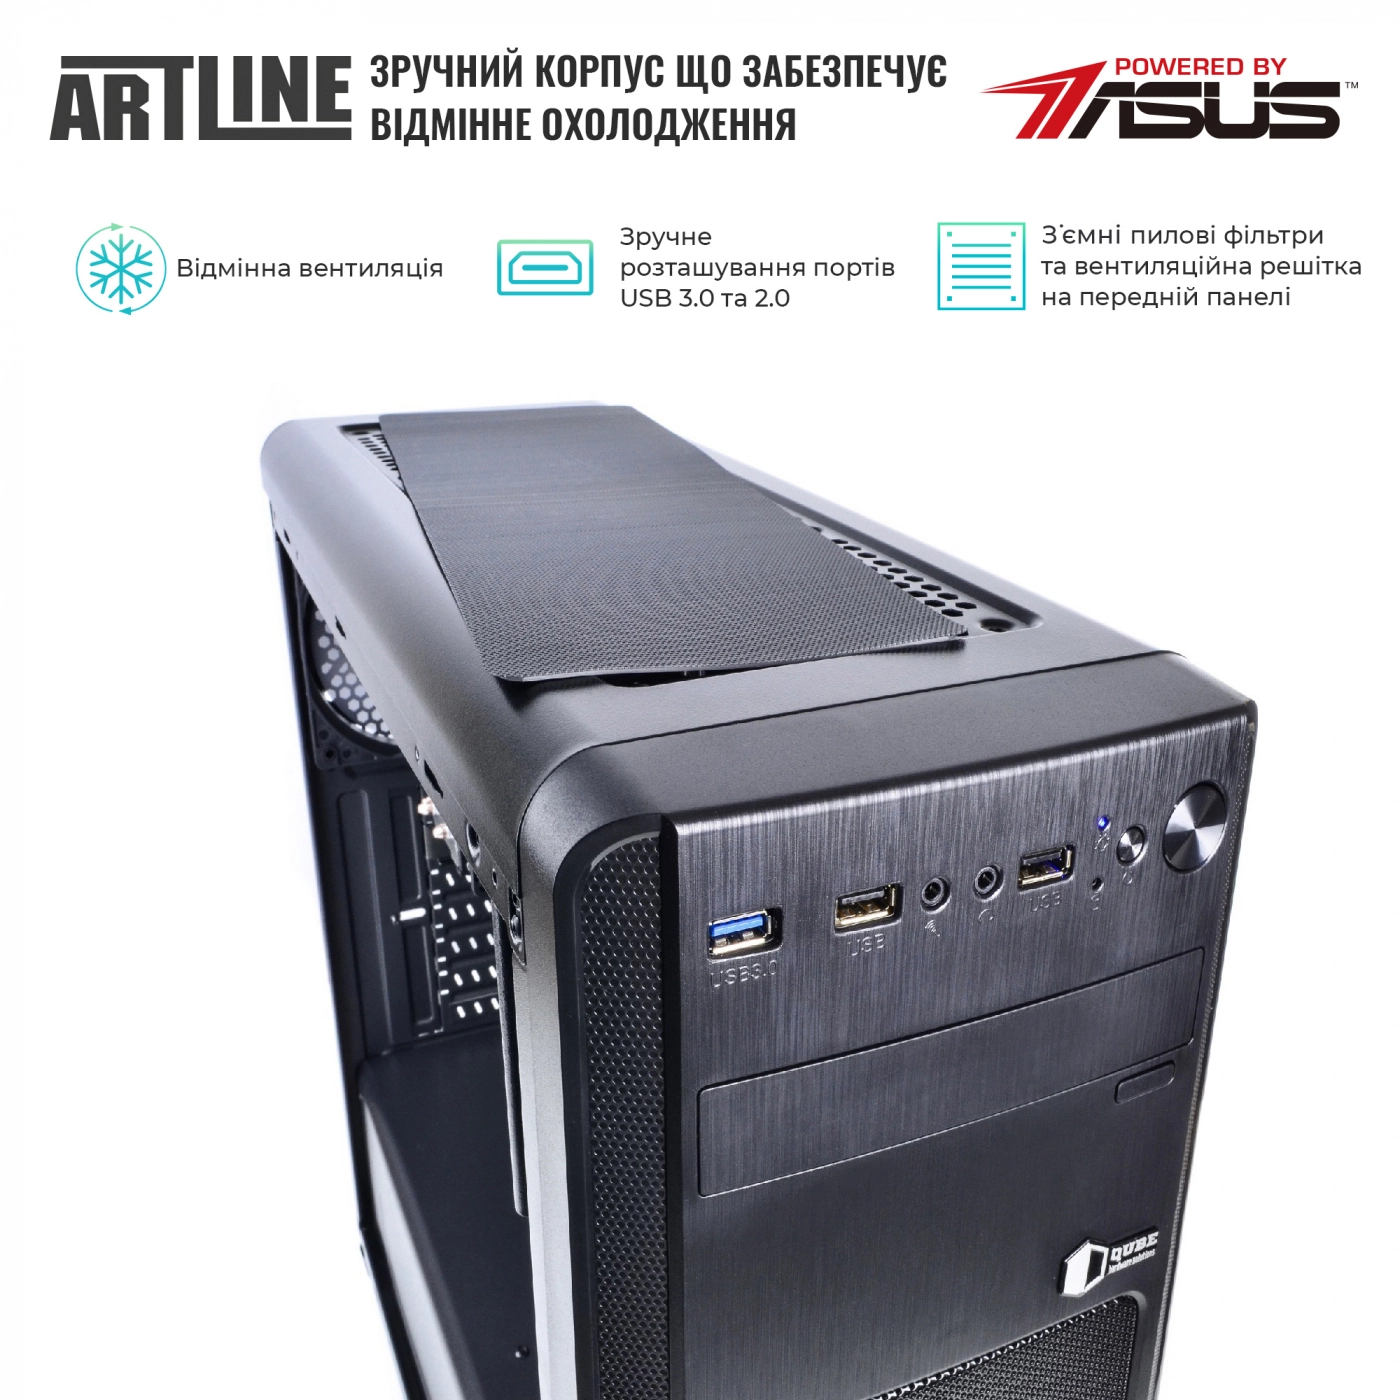 Купити Сервер ARTLINE Business T27v15 - фото 4